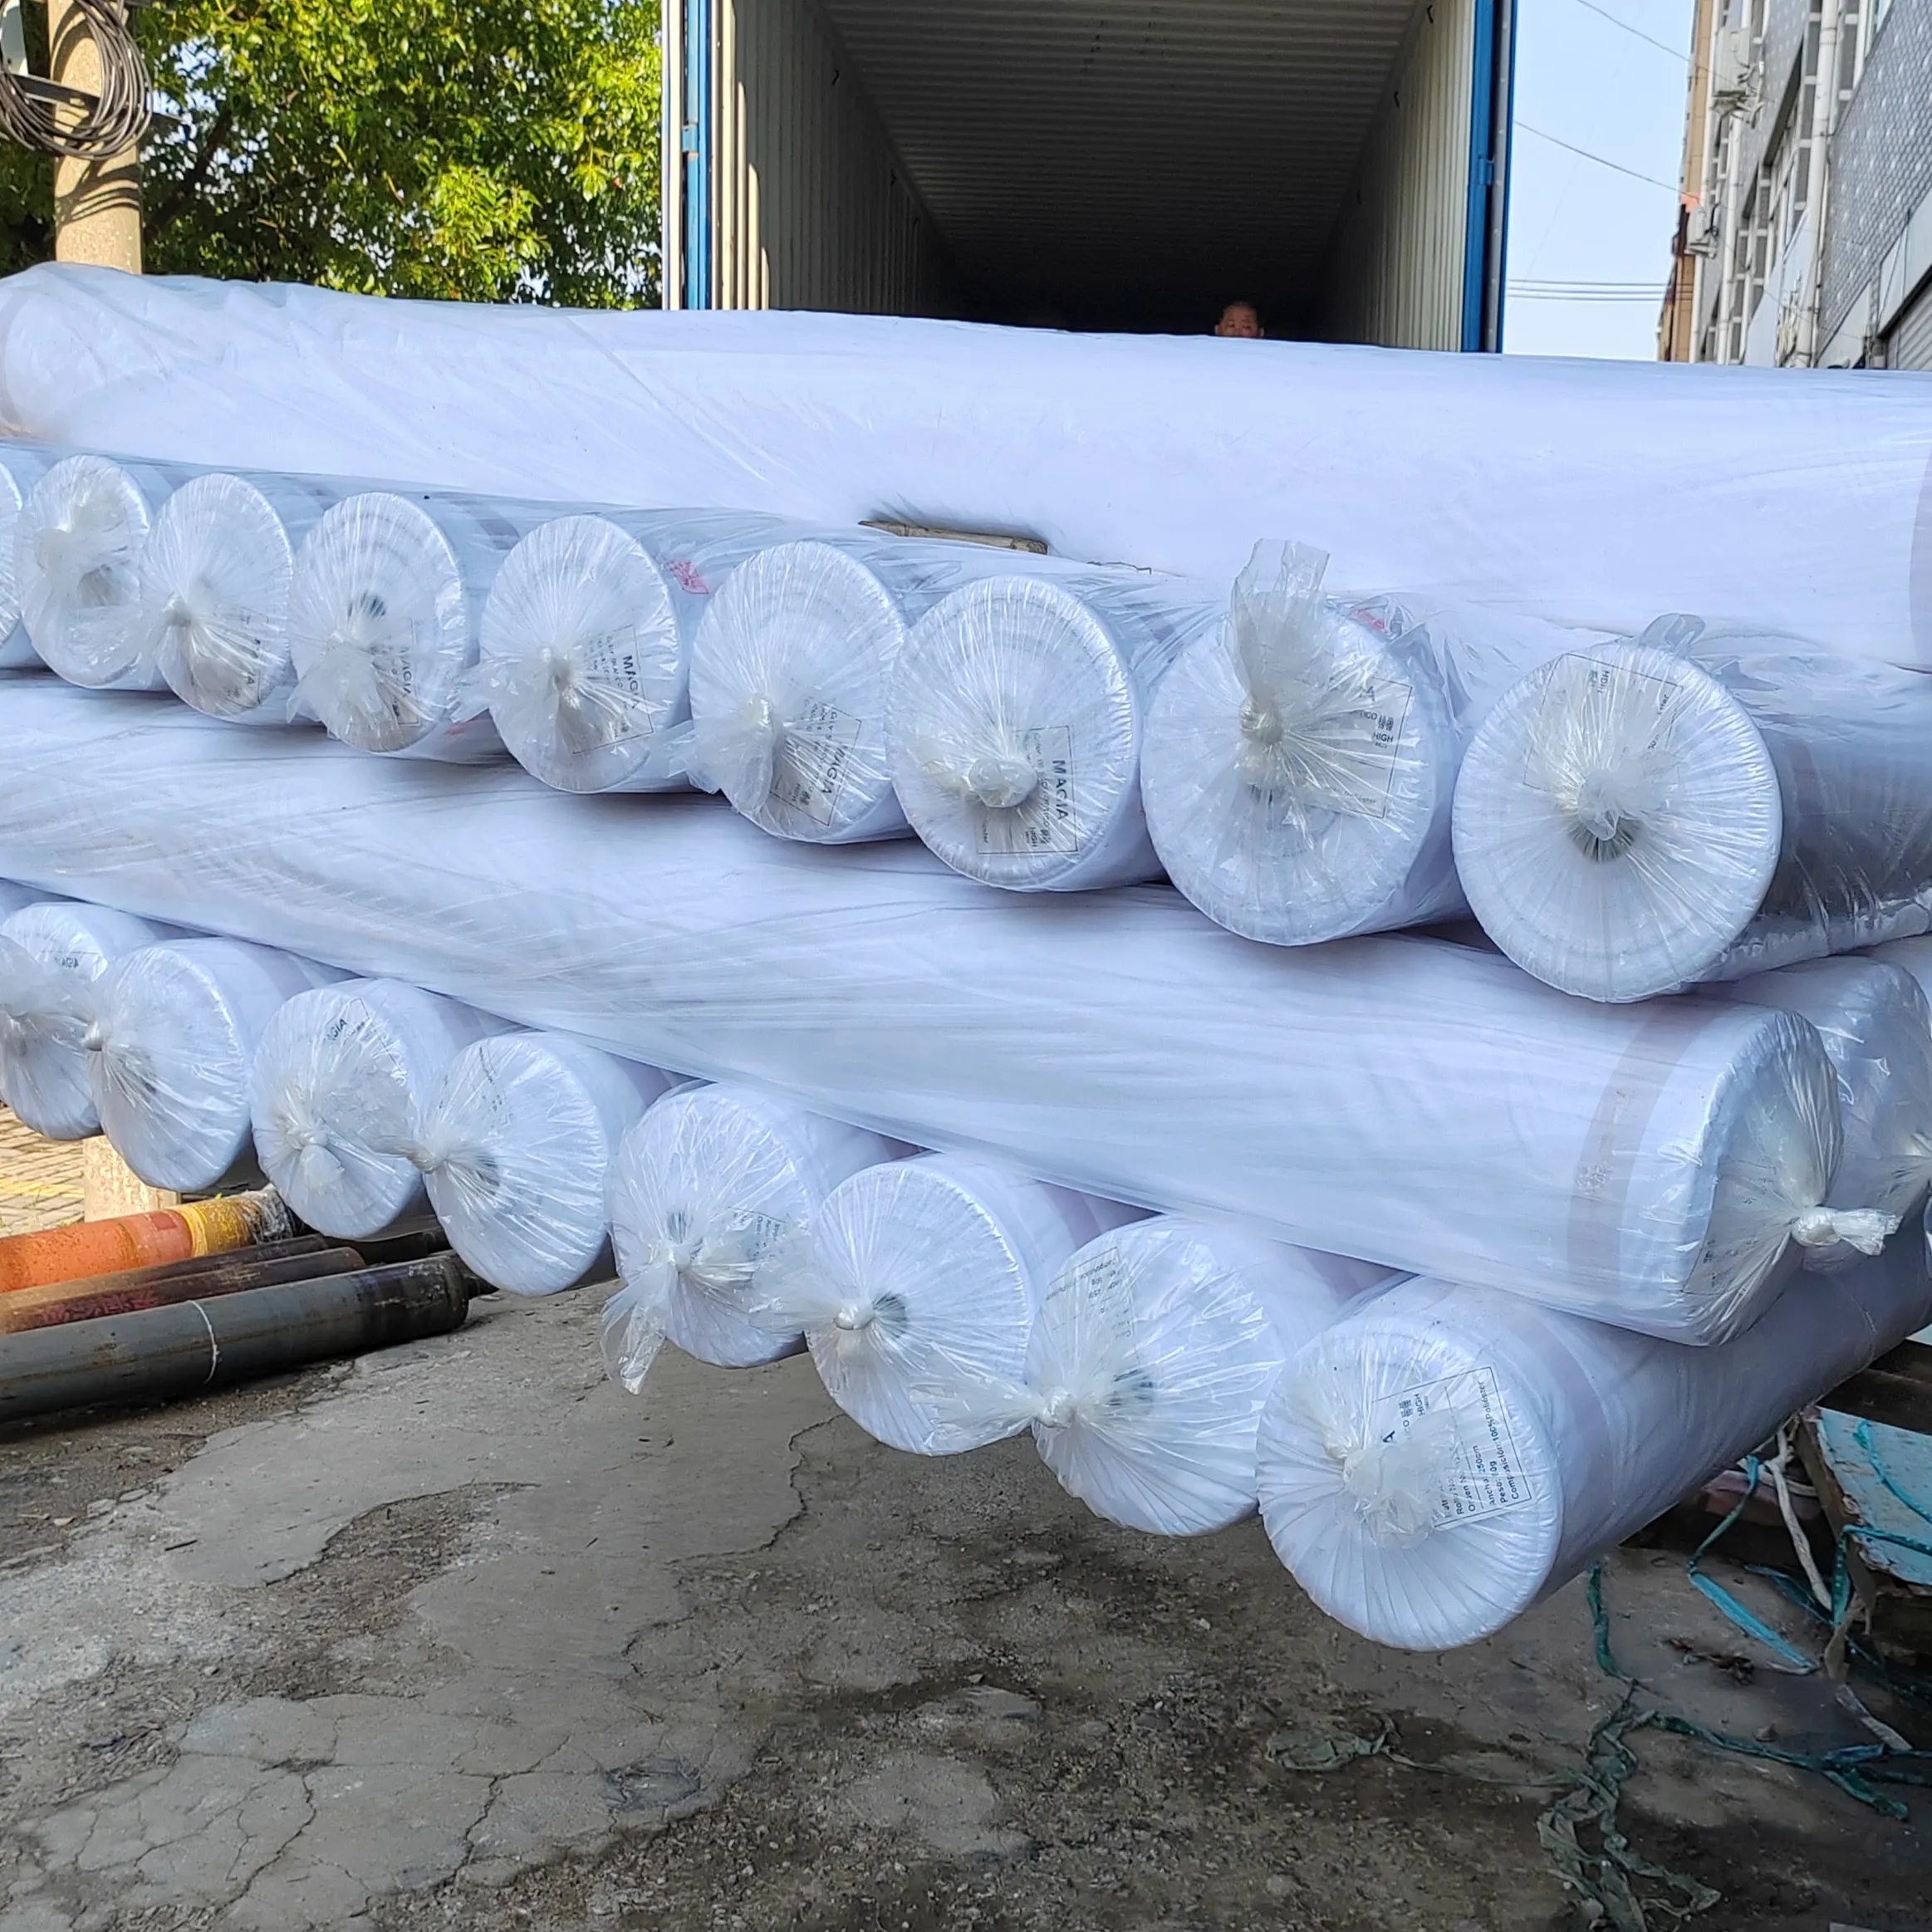 Tessuti di tintura per spazzolatura in microfibra di poliestere 100% di alta qualità con più di 200 macchine per tessere nella nostra fabbrica di tessitura